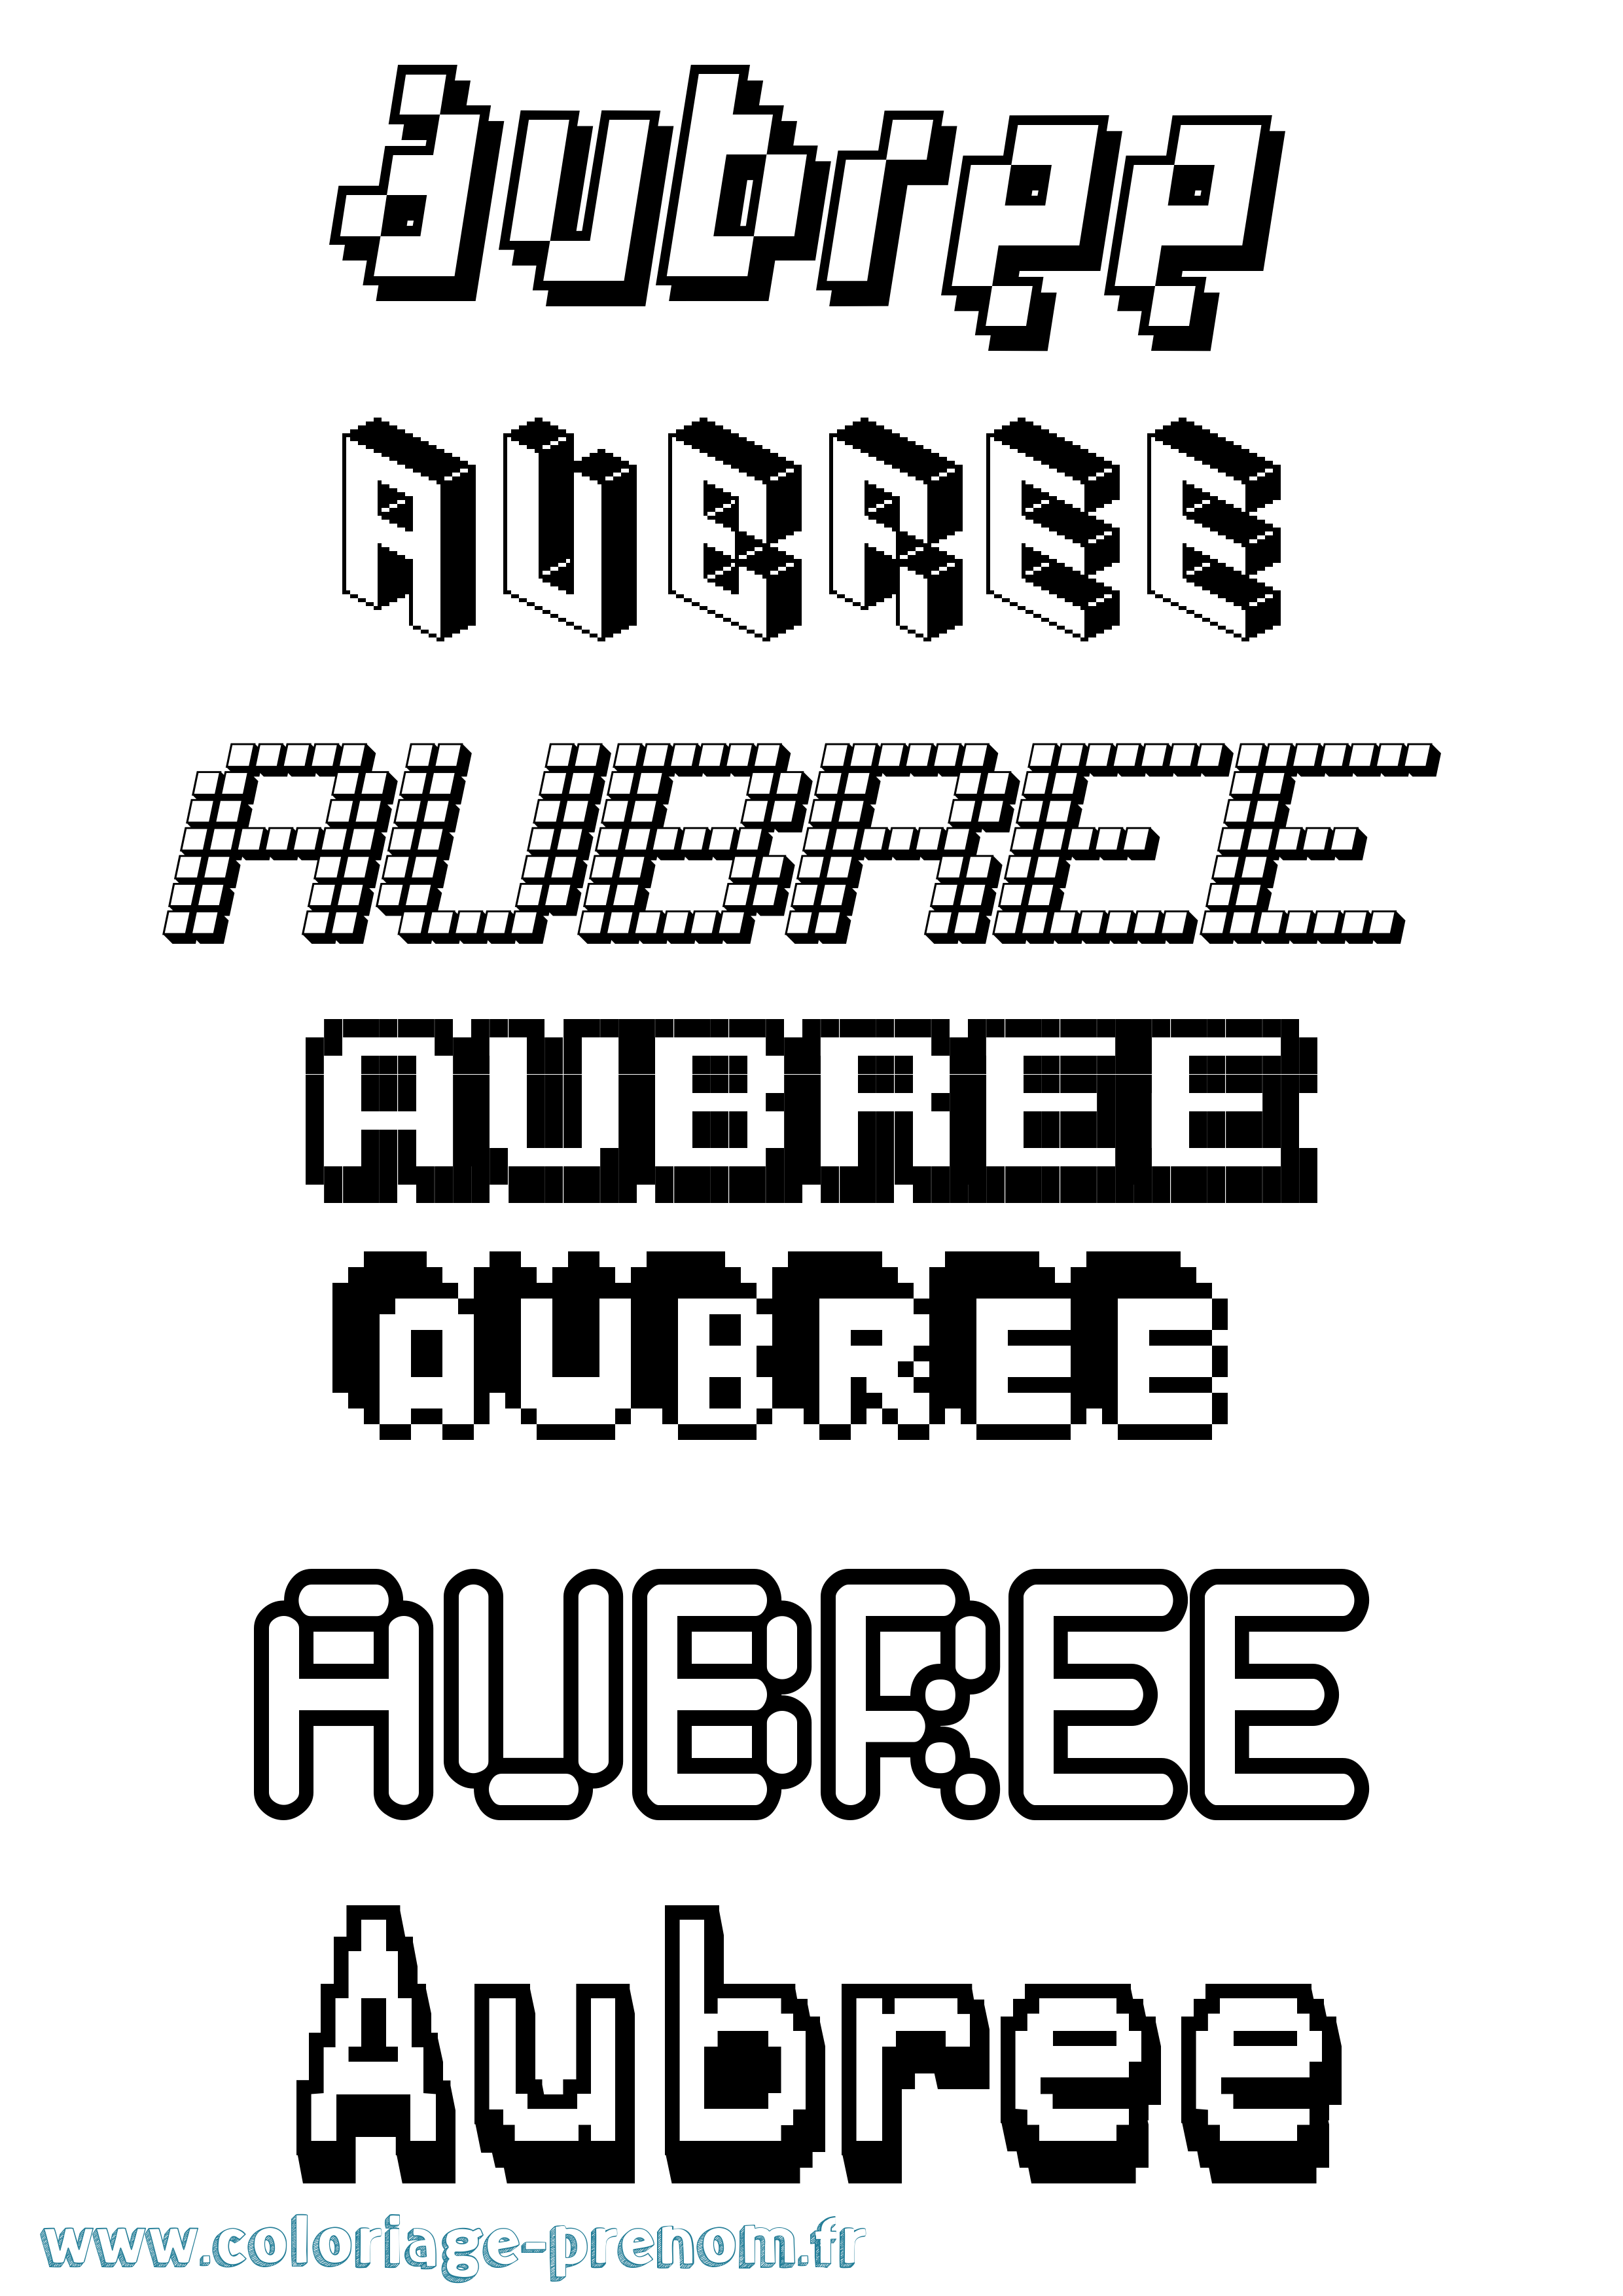 Coloriage prénom Aubree Pixel